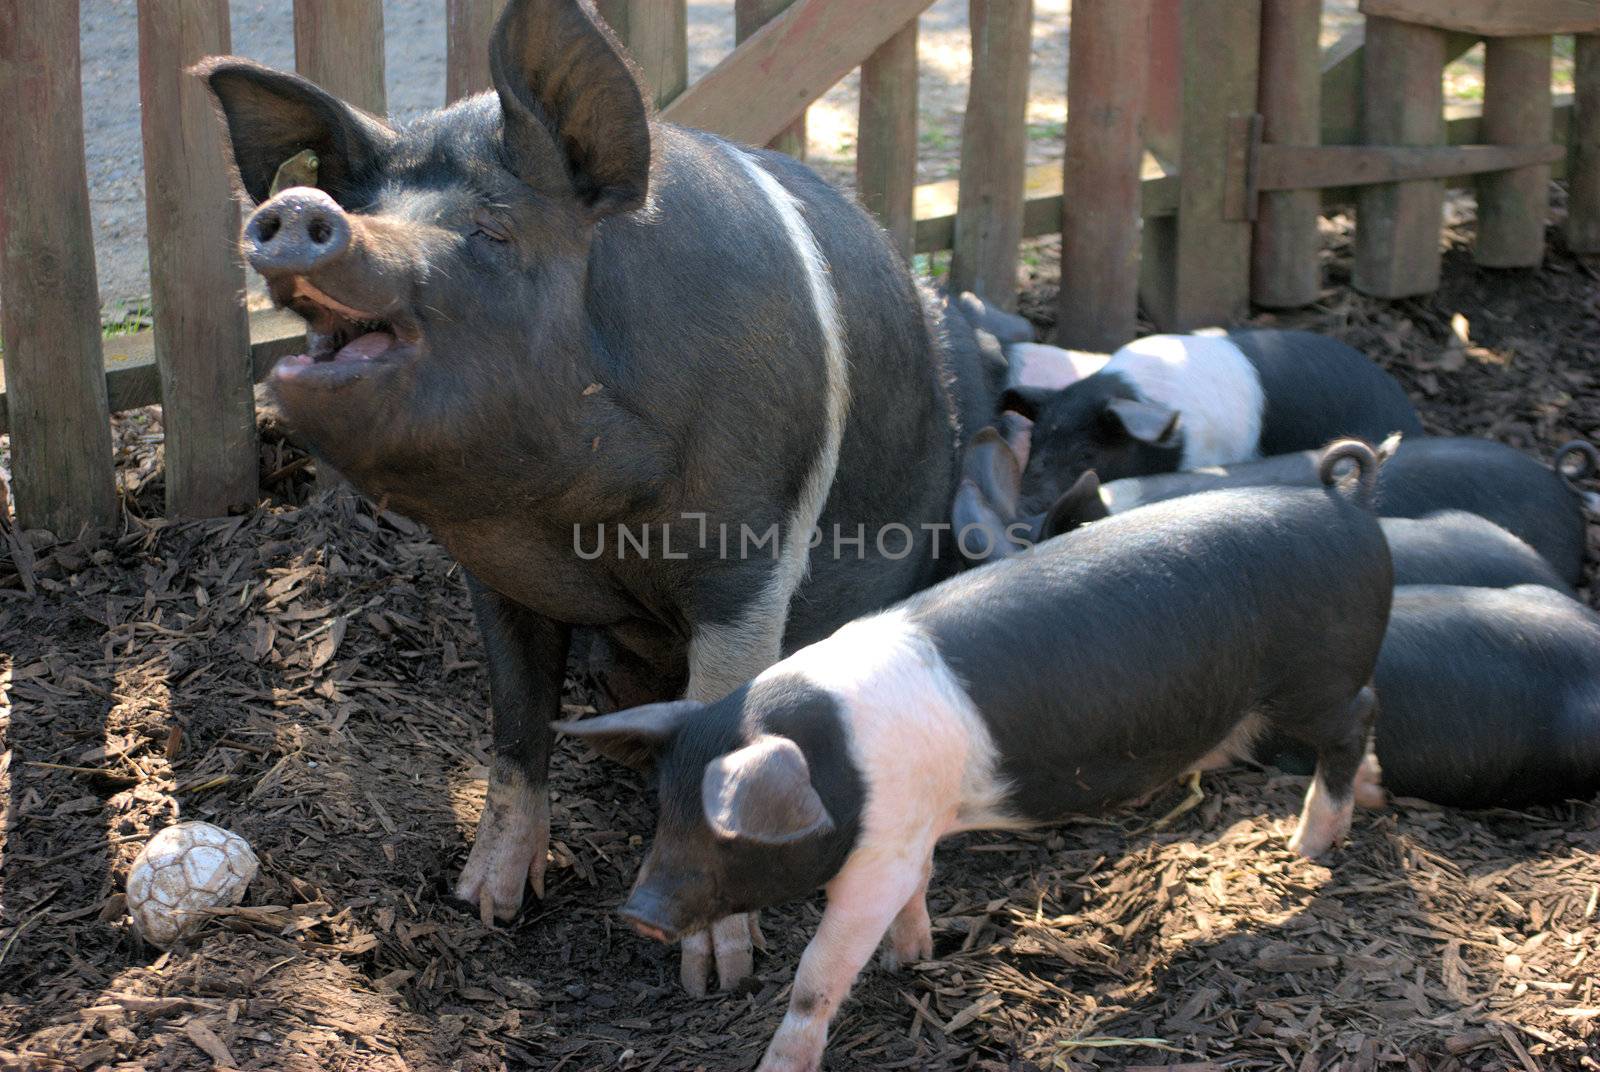 Happy Pigs by pauws99